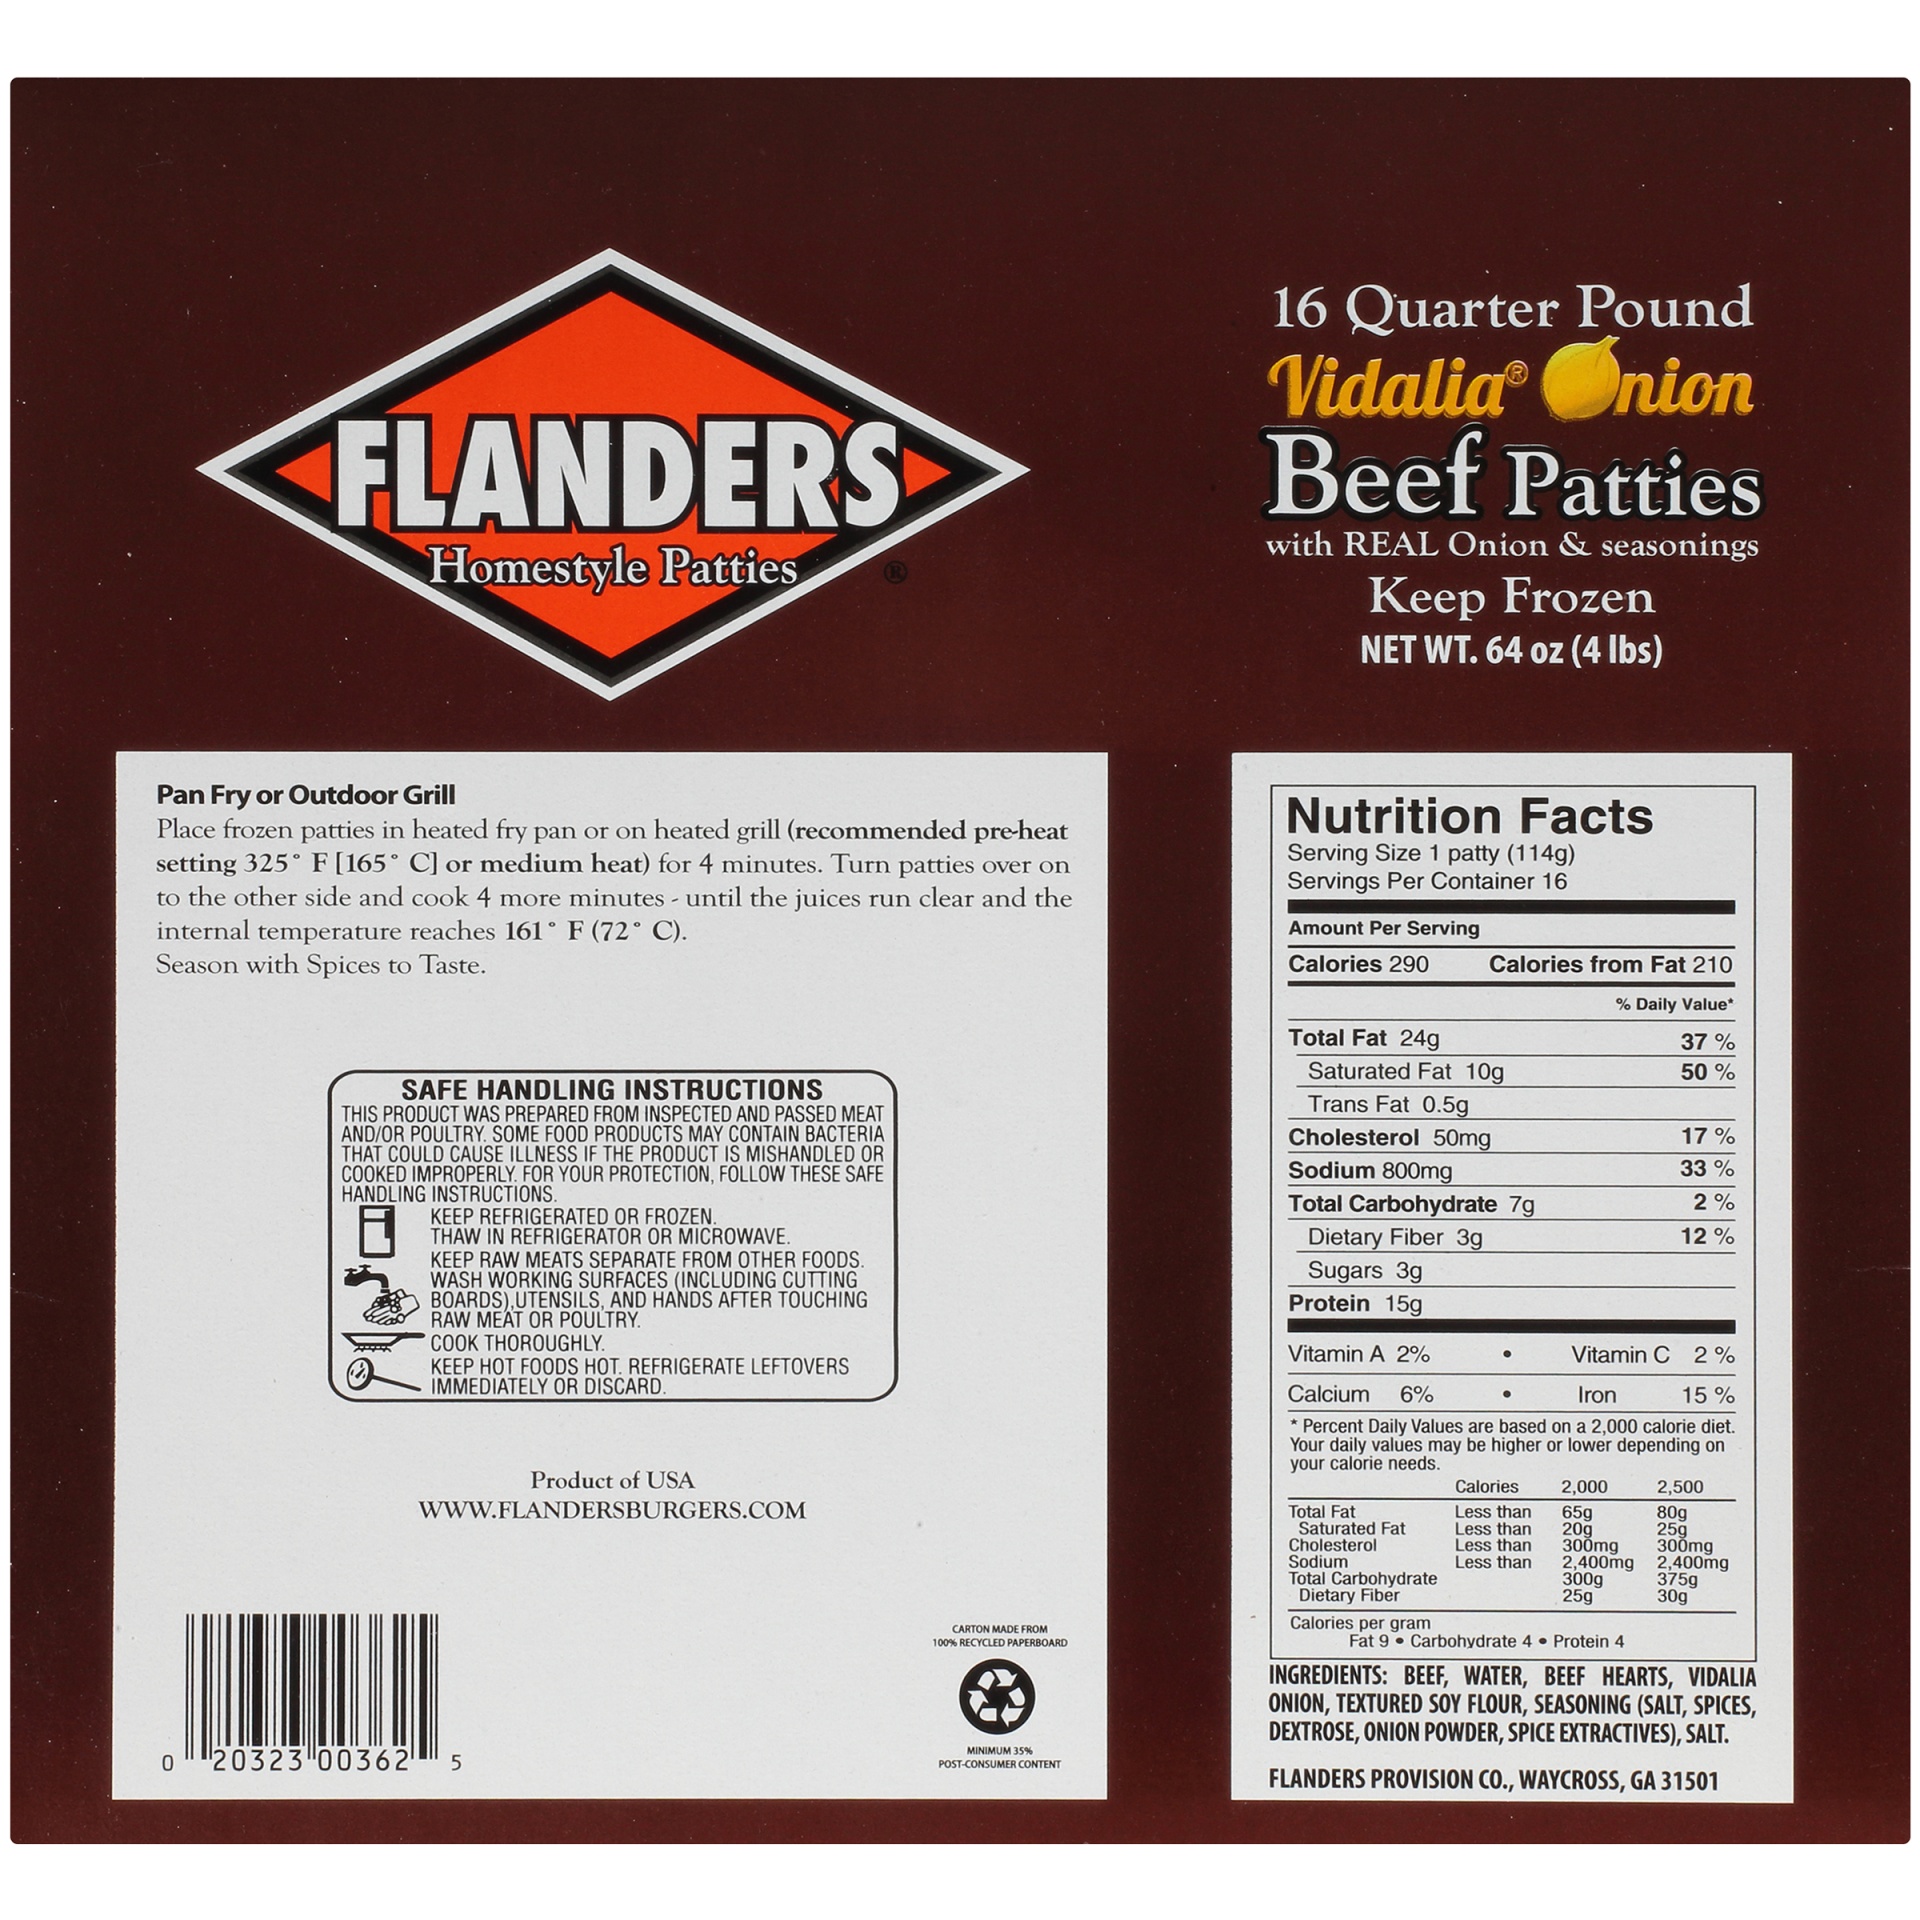 slide 6 of 8, Flanders Homestyle Patties 16 Quarter Pound Vidalia Onion Beef Patties, 4 lb